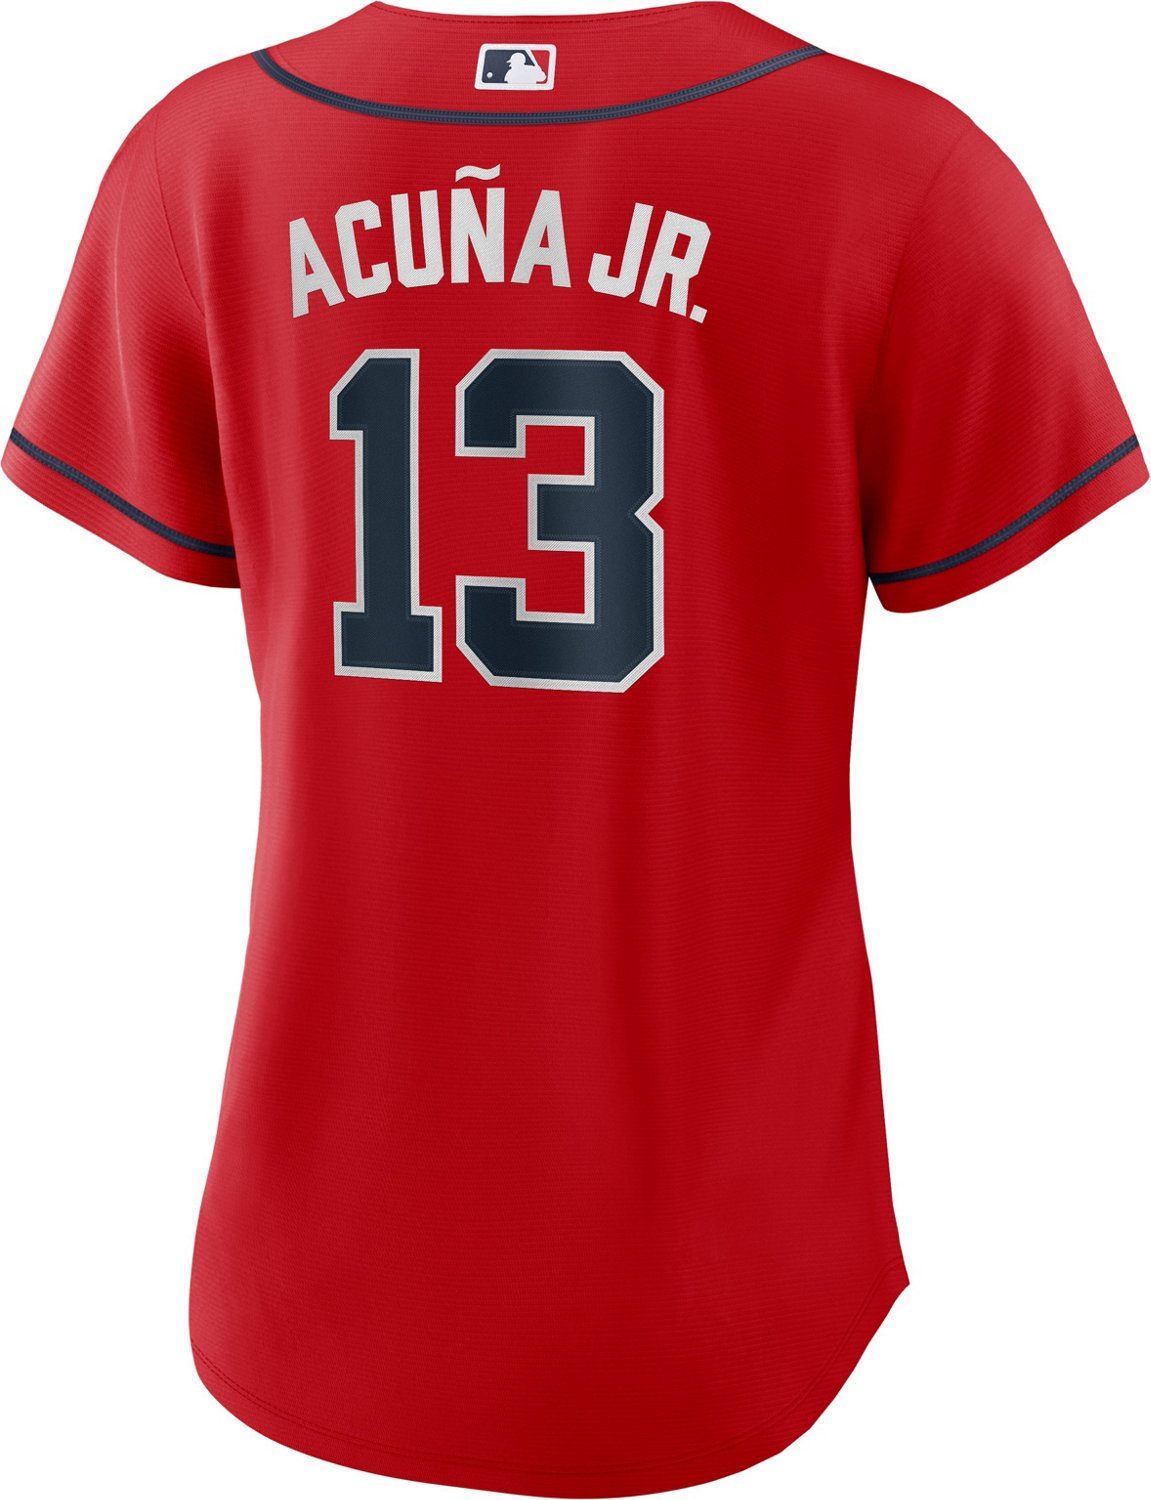 Nike Men's Atlanta Braves Ronald Acuña Jr. #13 Black Cool Base